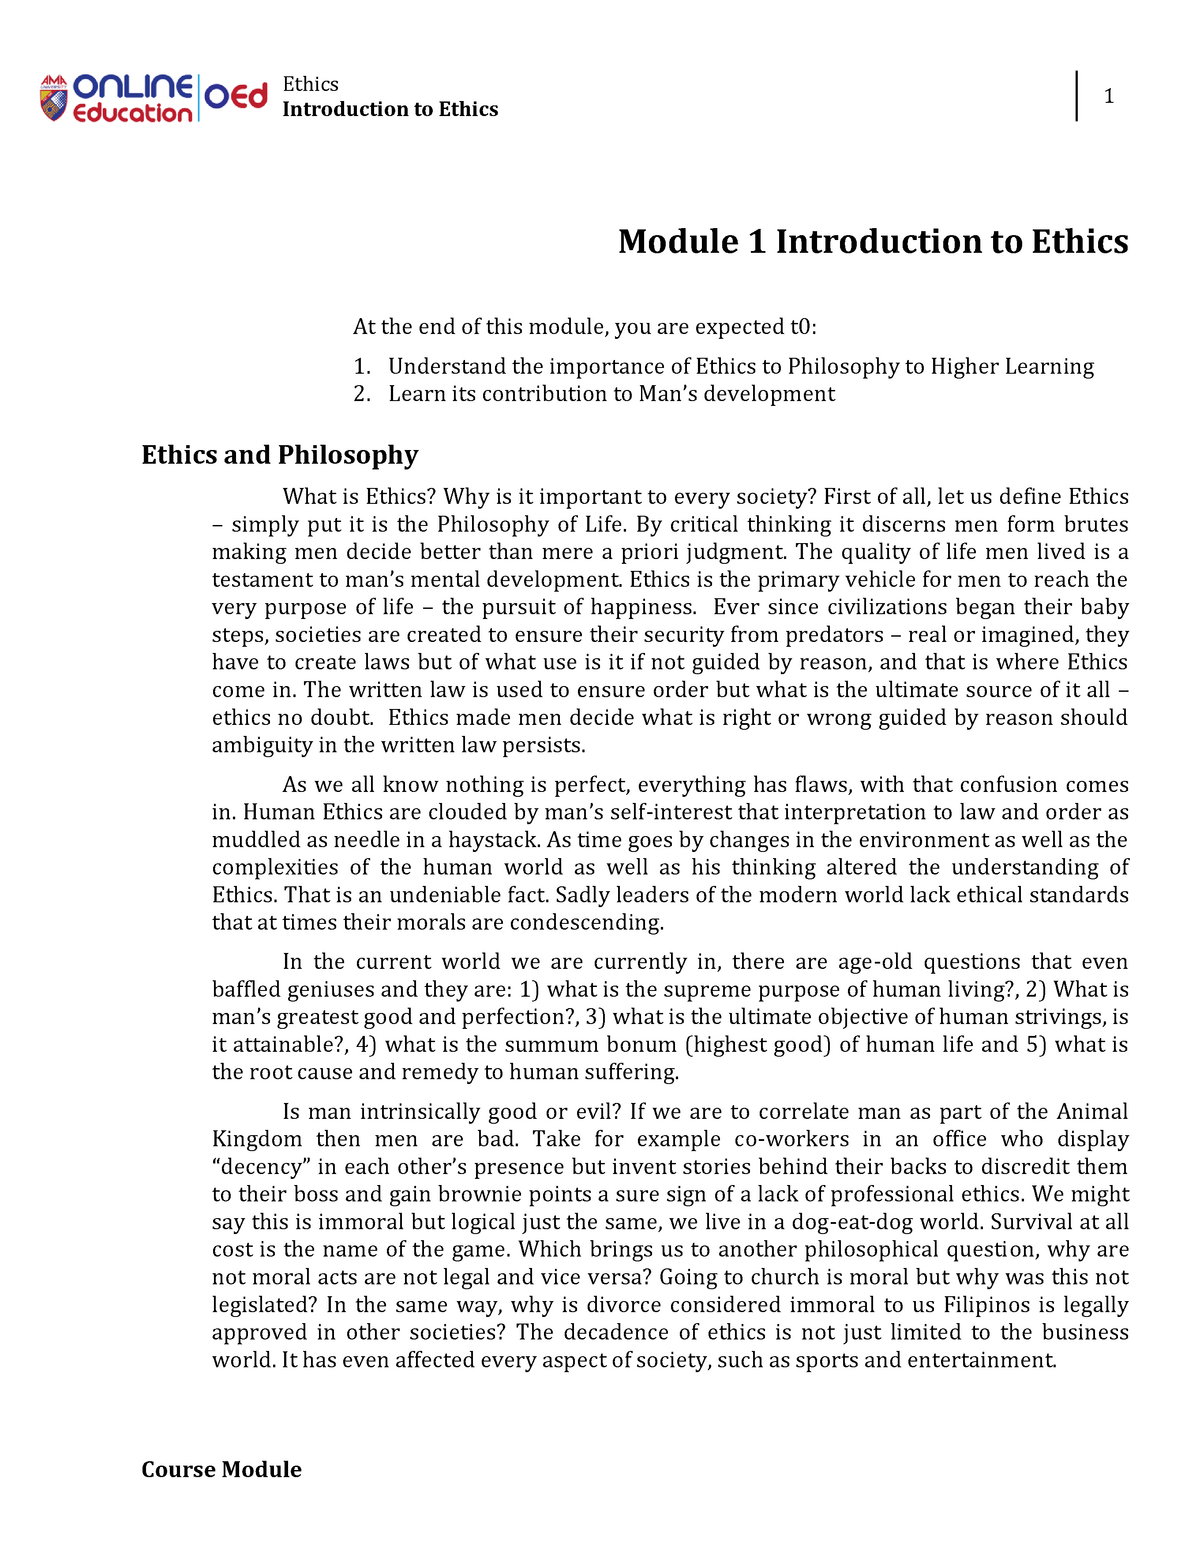 ethics and morality argumentative essay